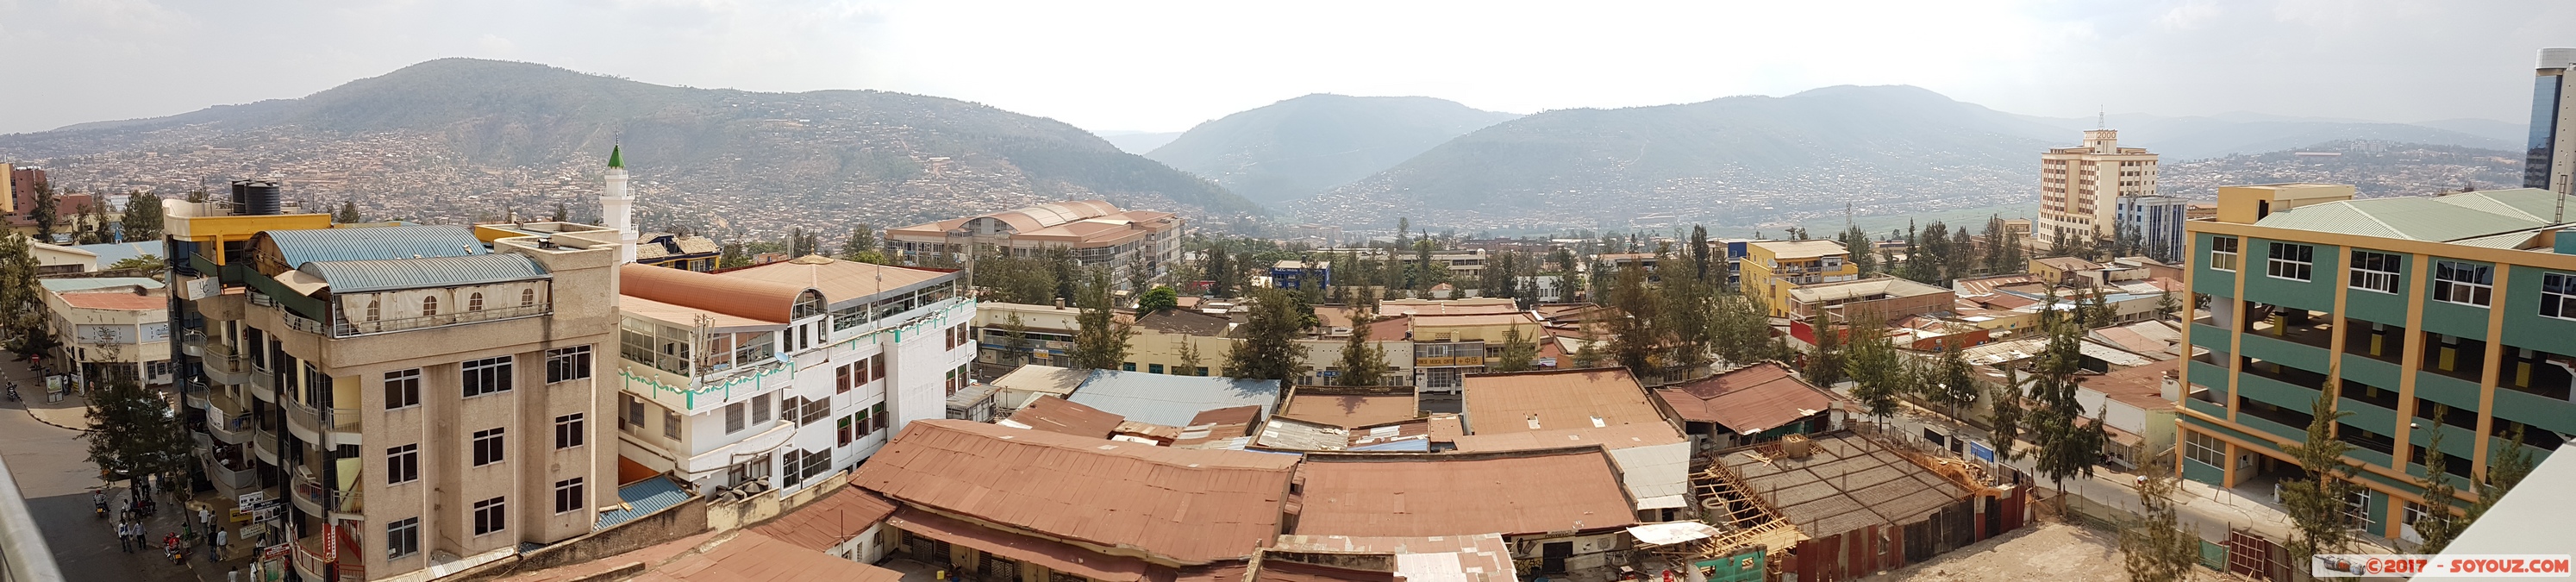 Kigali - Centre ville - panorama
Mots-clés: geo:lat=-1.94638889 geo:lon=30.05916667 geotagged Kigali Kigali Province RWA Rwanda panorama